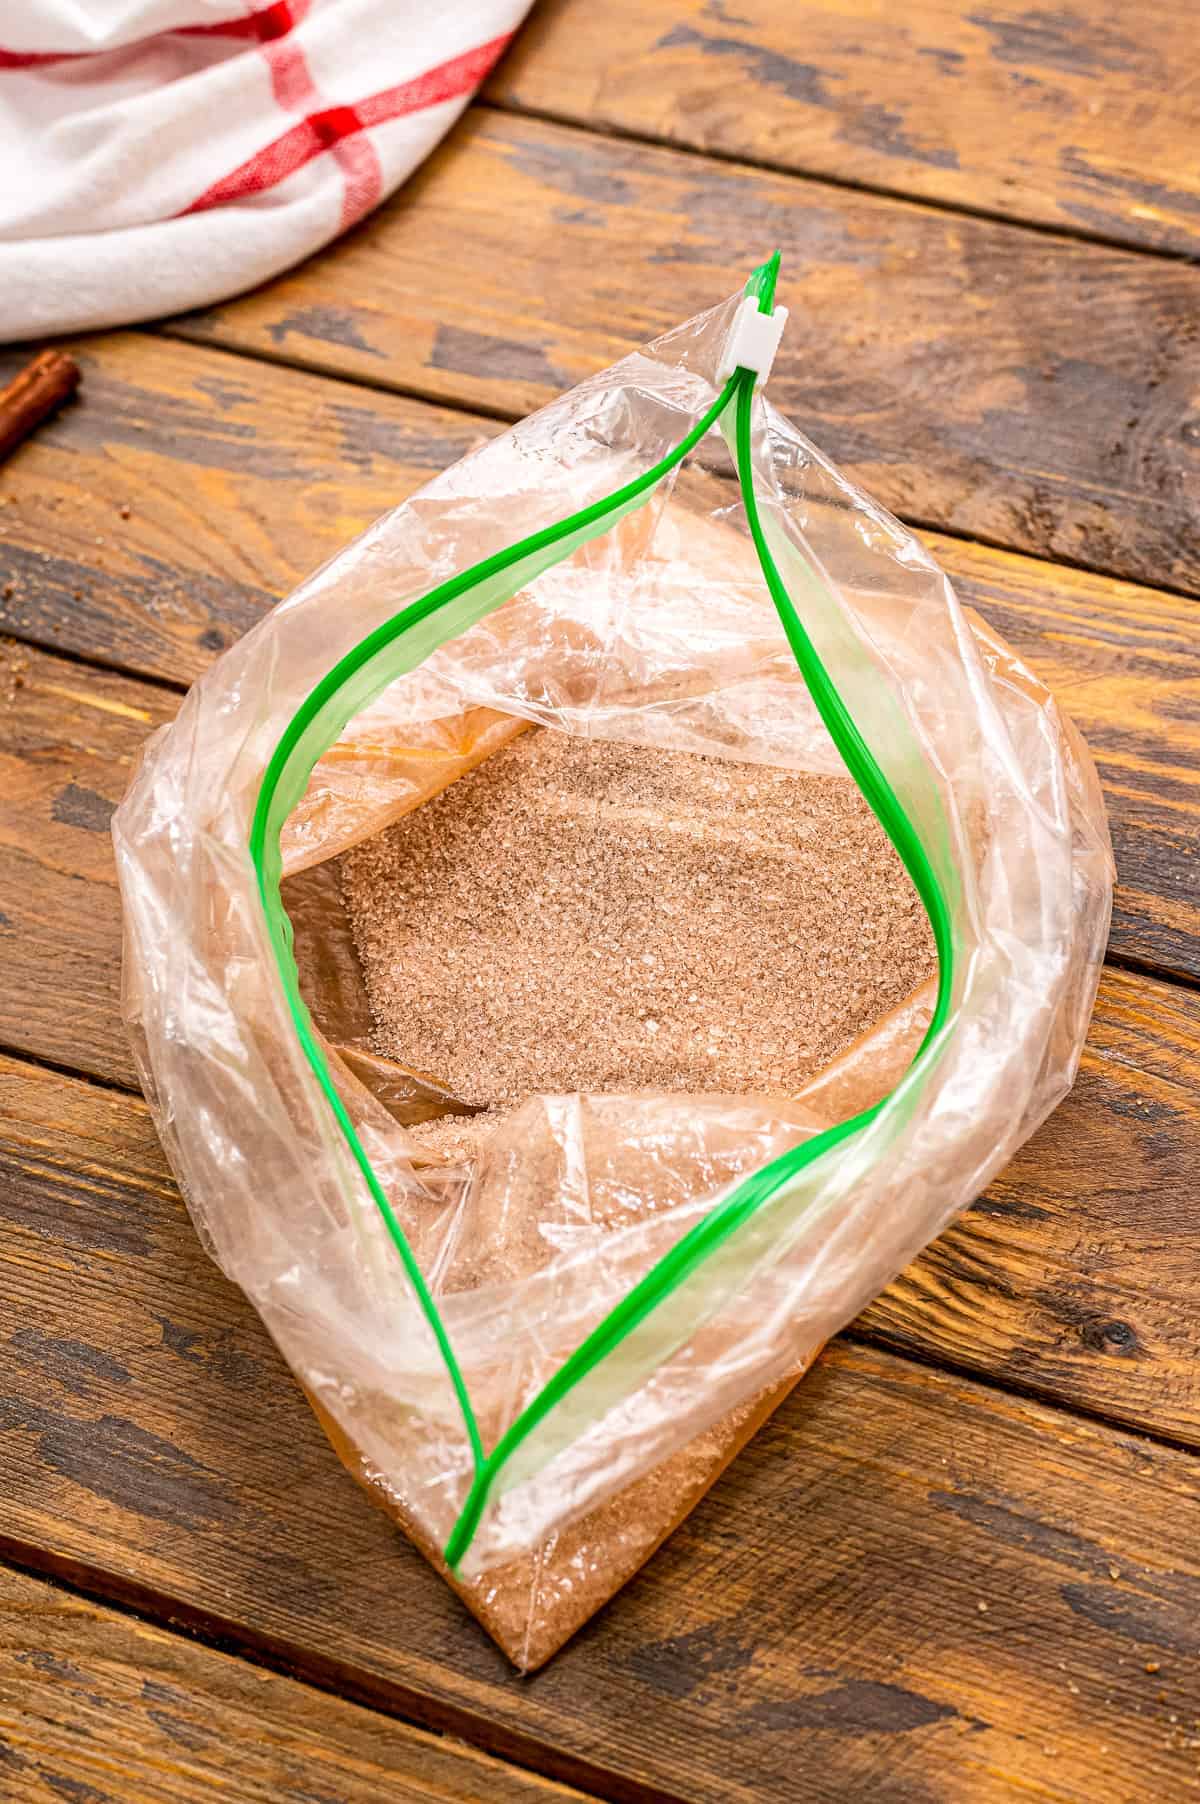 A cinnamon sugar mixture in resealable plastic bag